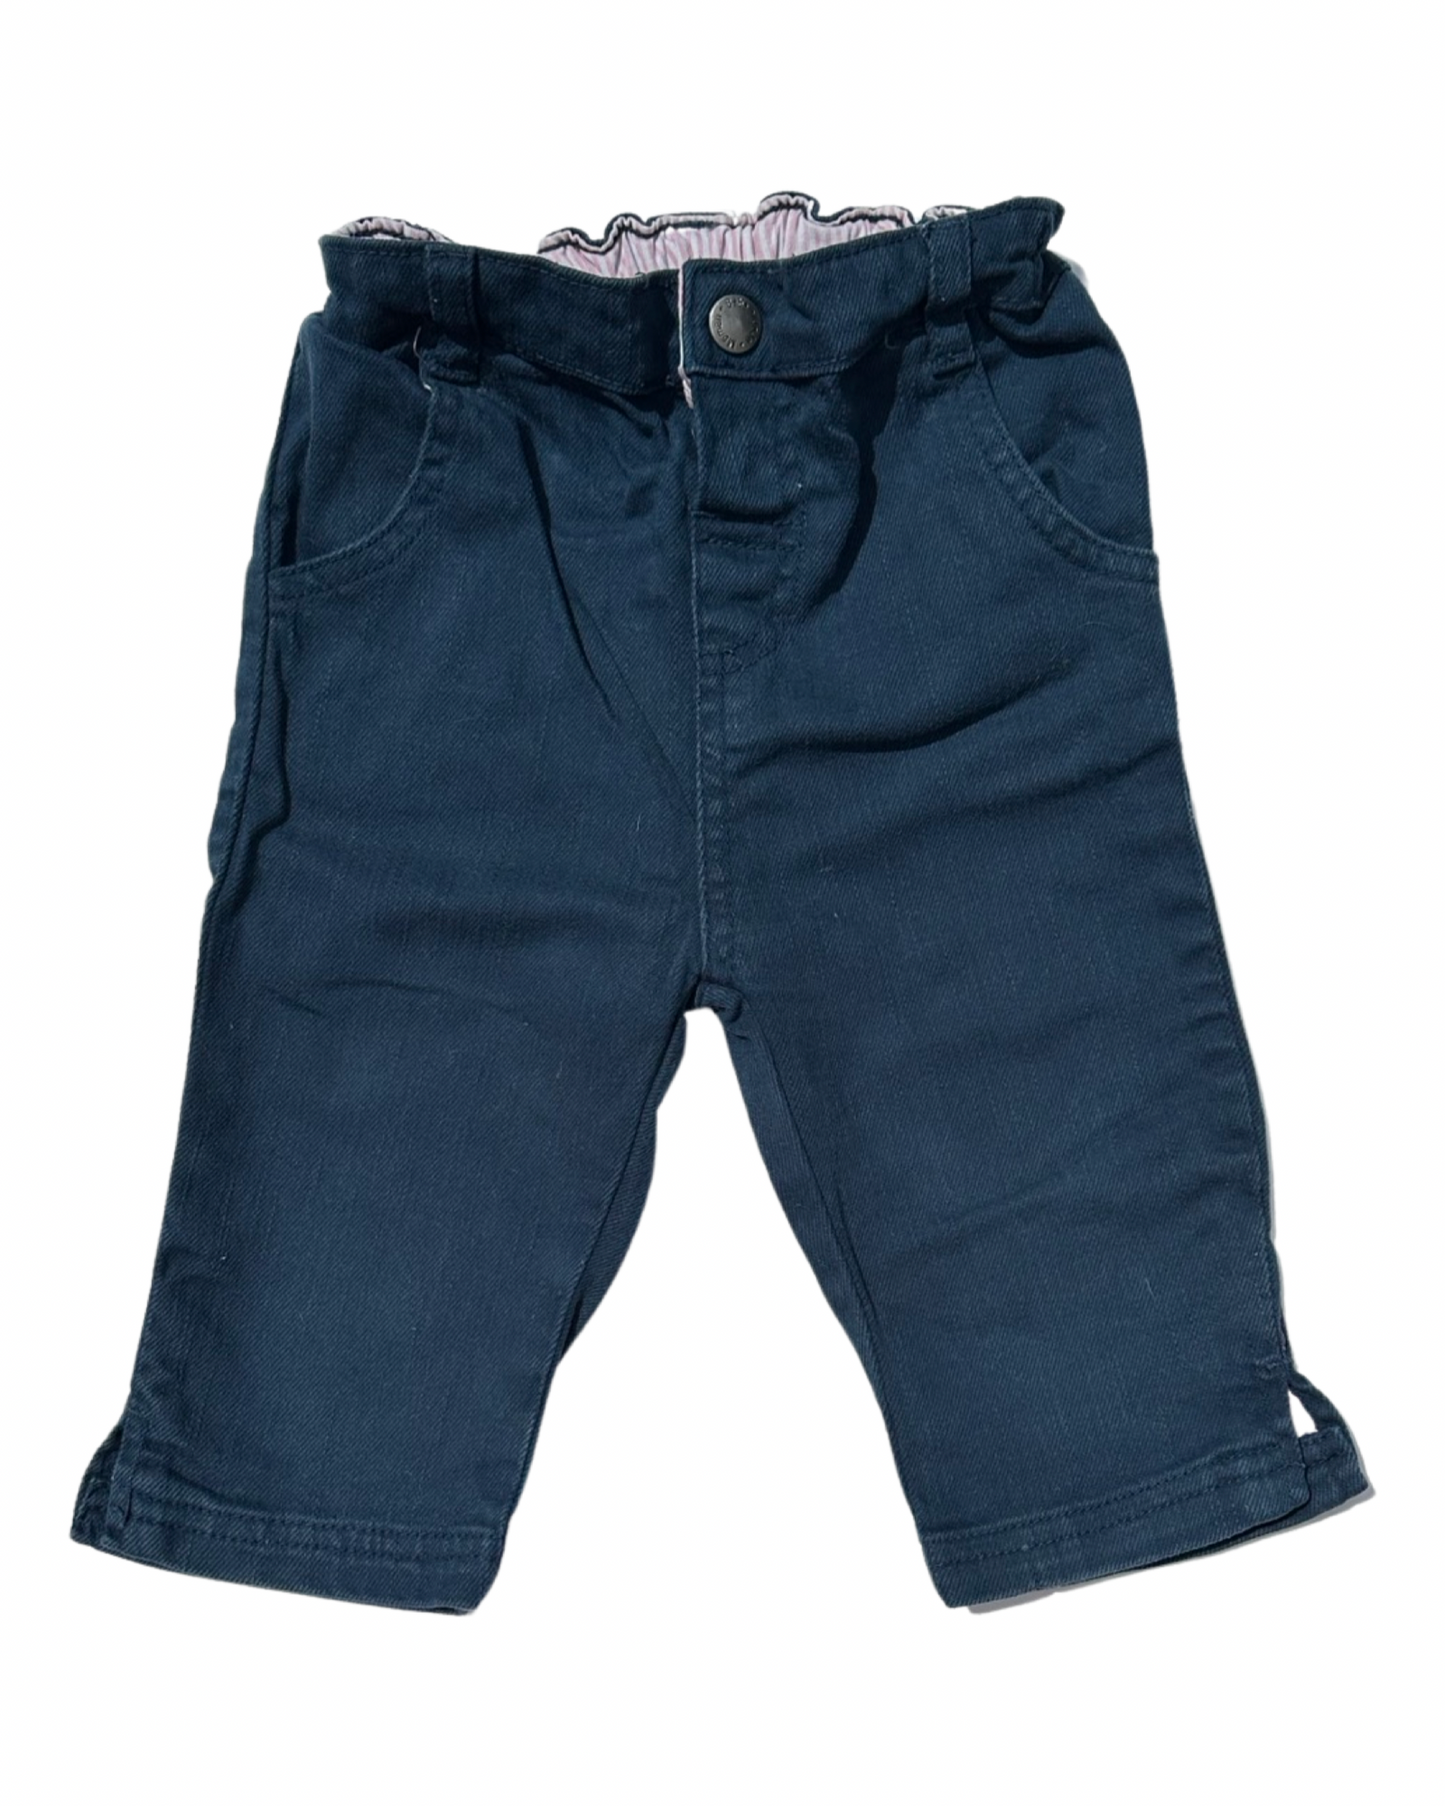 JoJo Maman Bebe navy cropped trousers (size 2-3yrs)